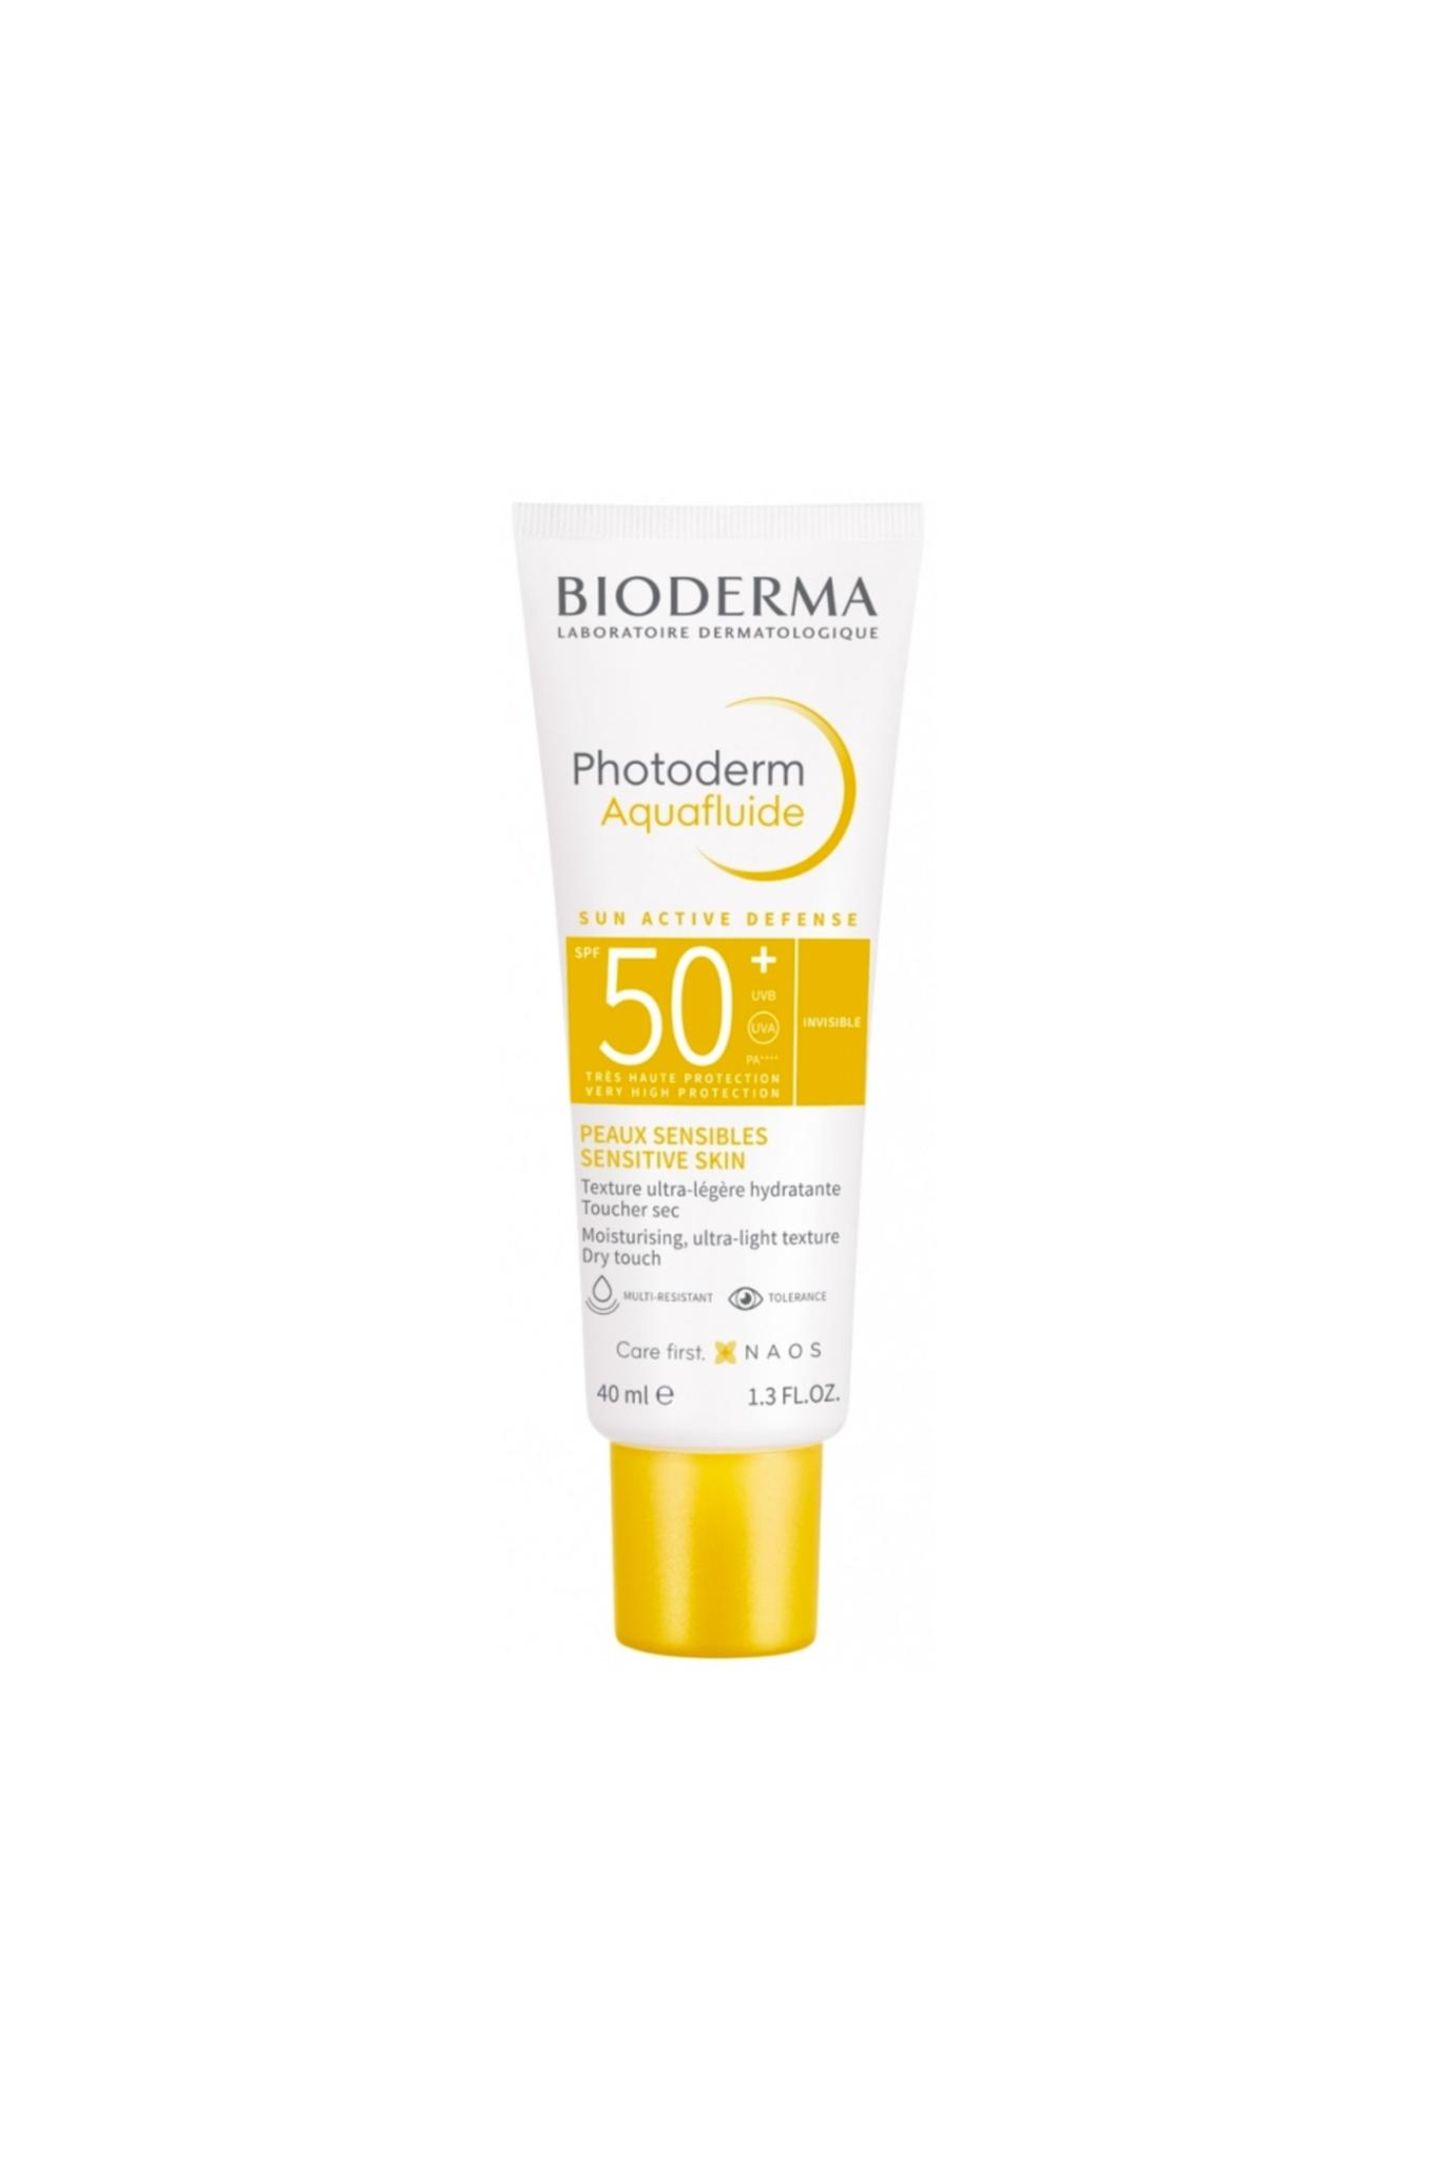 Sonnenschutz Gesicht: Bioderma Photoderm Aquafluide Sun Active Defense LSF50+